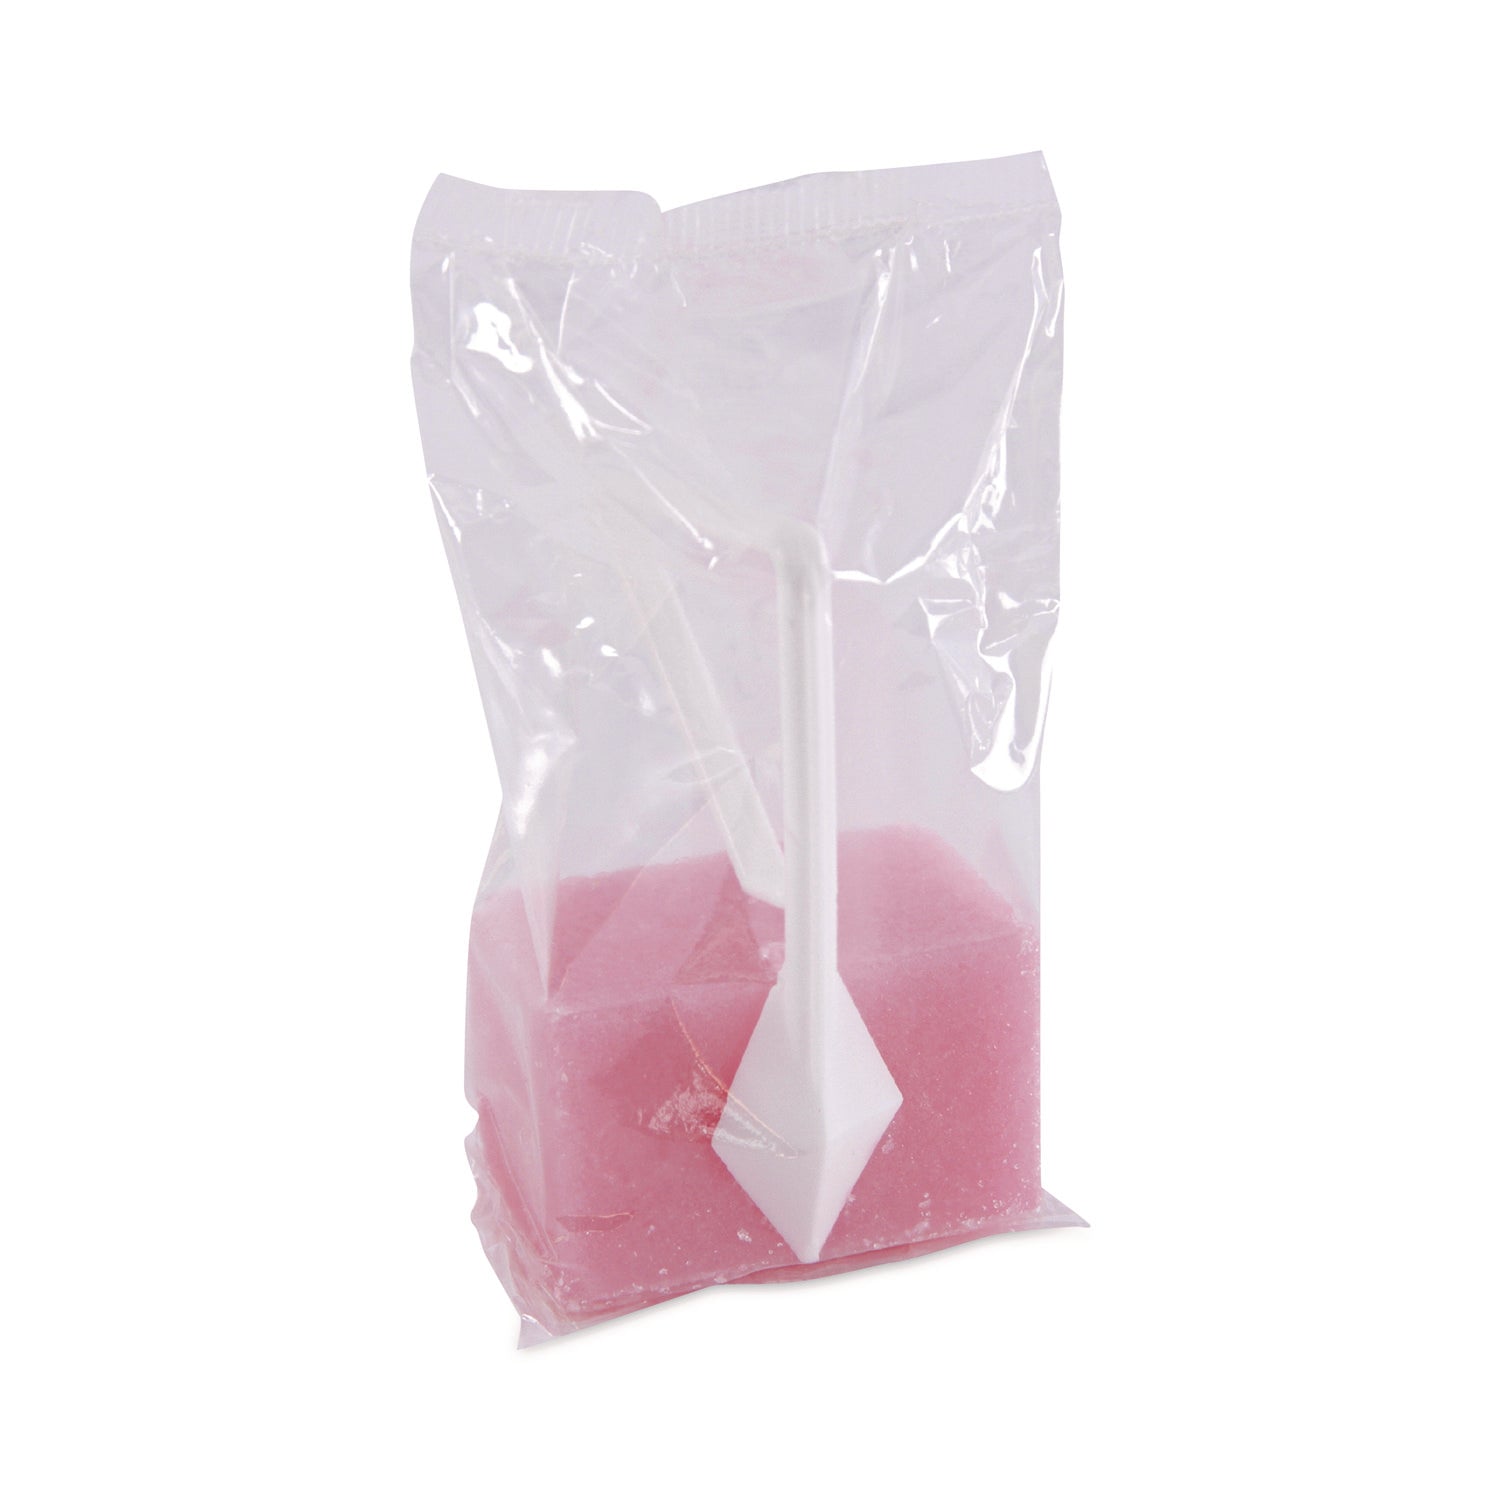 Toilet Bowl Para Deodorizer Block, Cherry Scent, 4 oz, Pink, 12/Box - 7